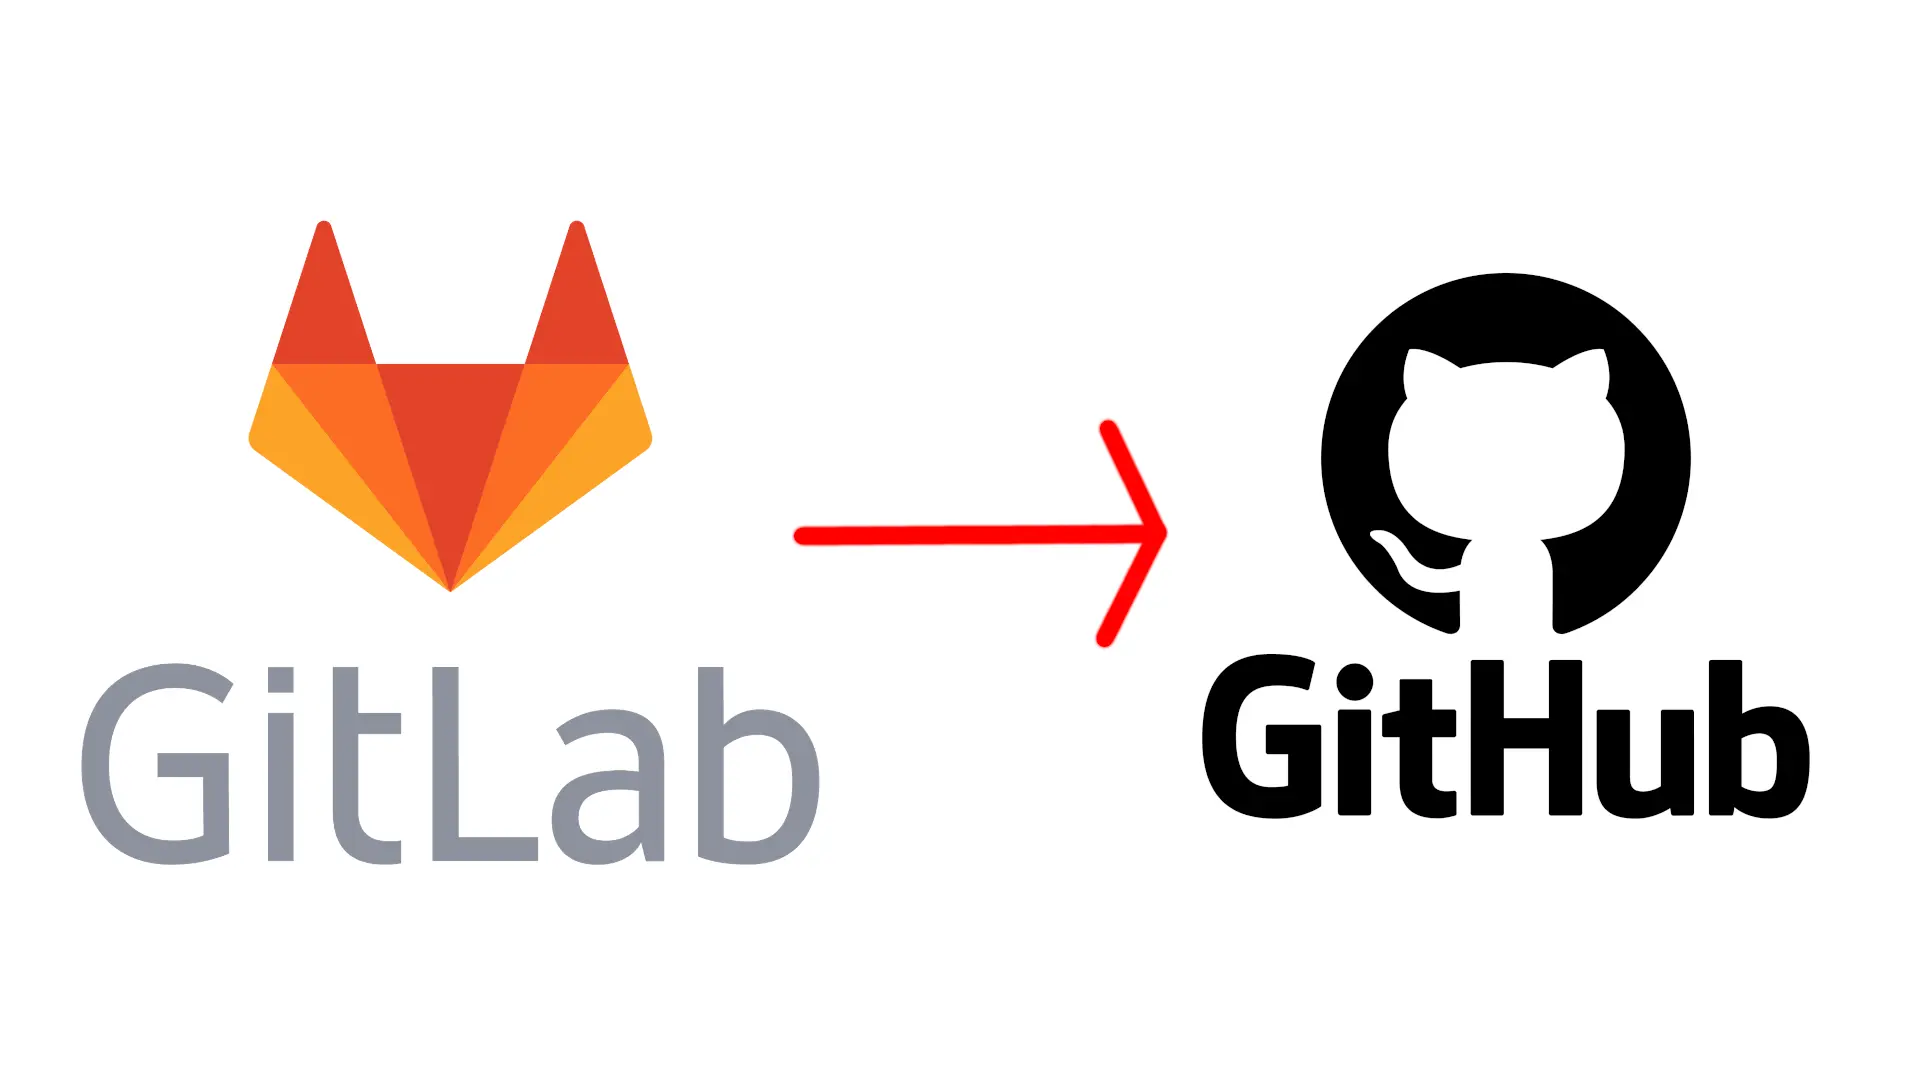 Mirror Gitlab repositories